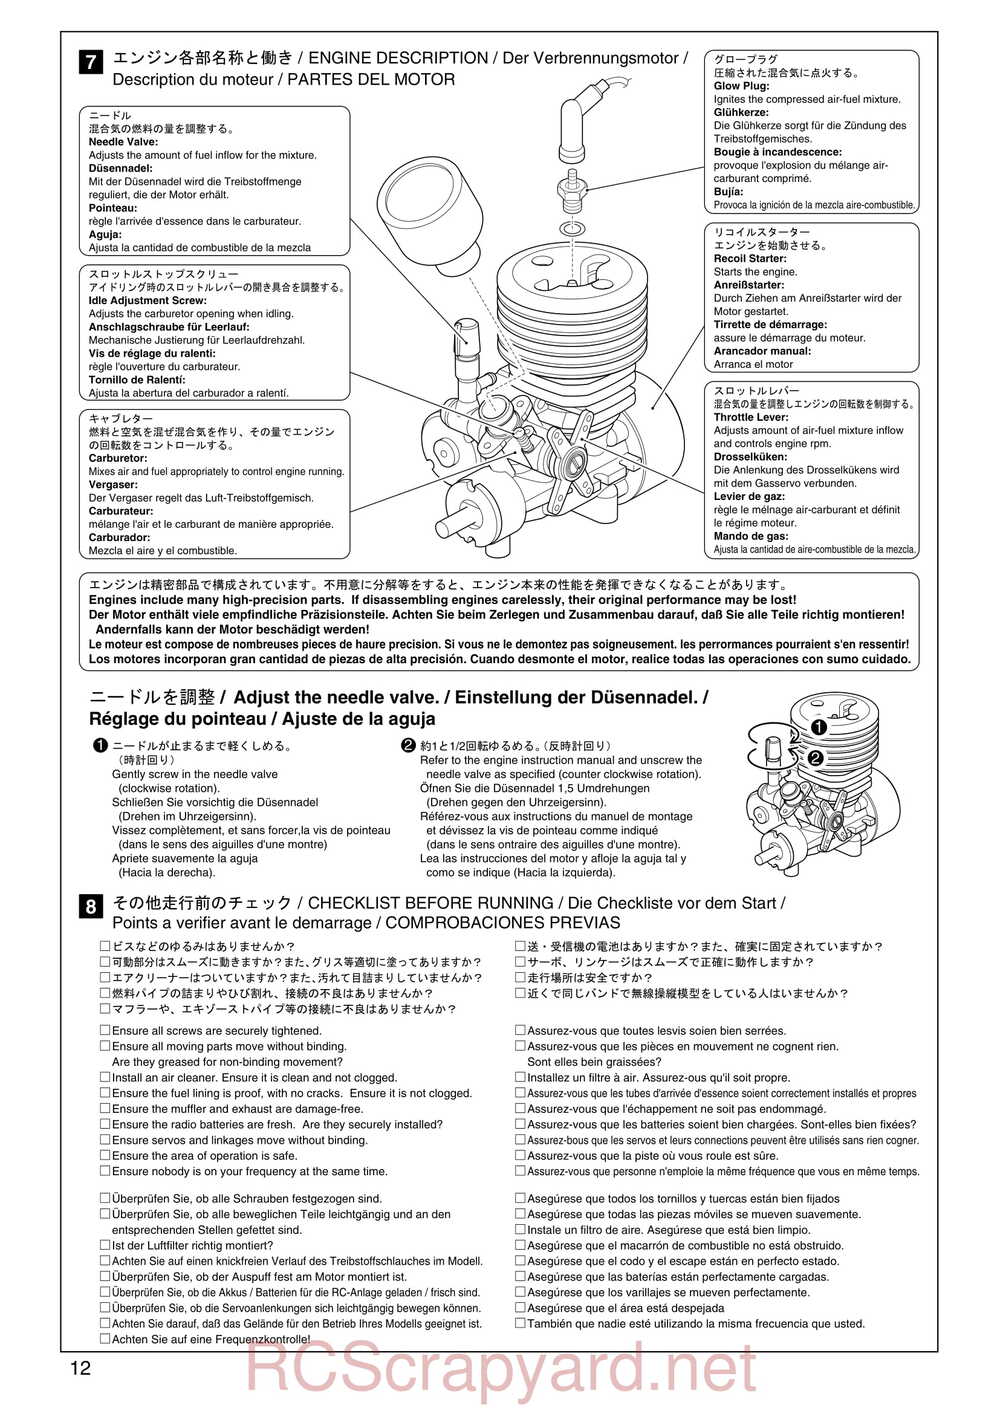 Kyosho - 31181 - Mega-Force - Manual - Page 12